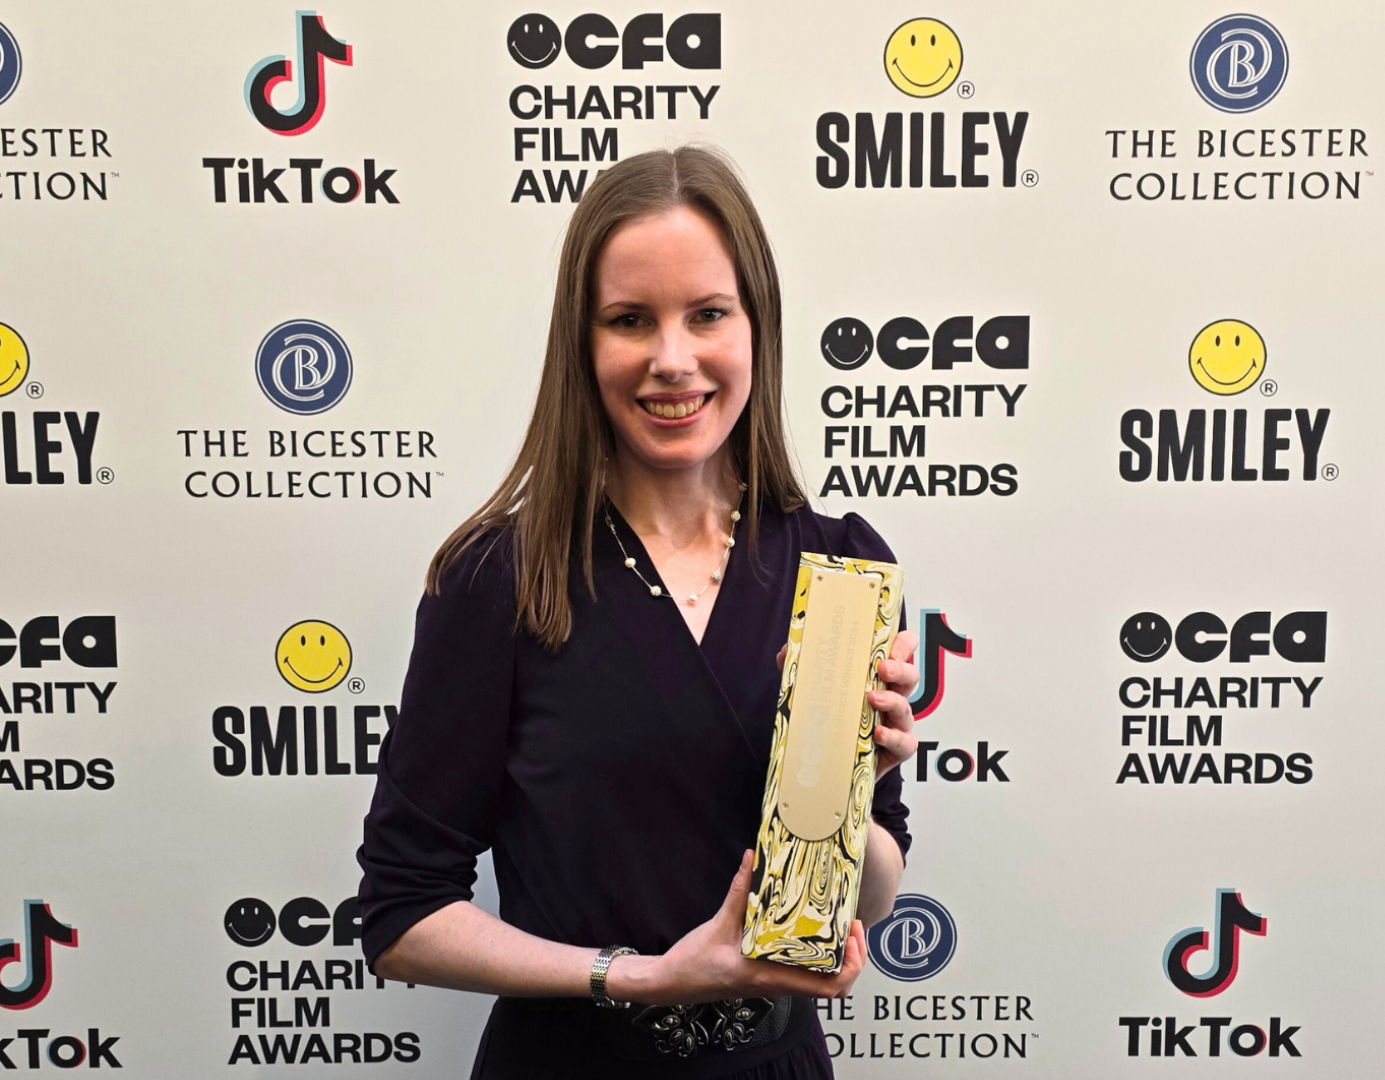 Deborah holding our Smiley Film Award